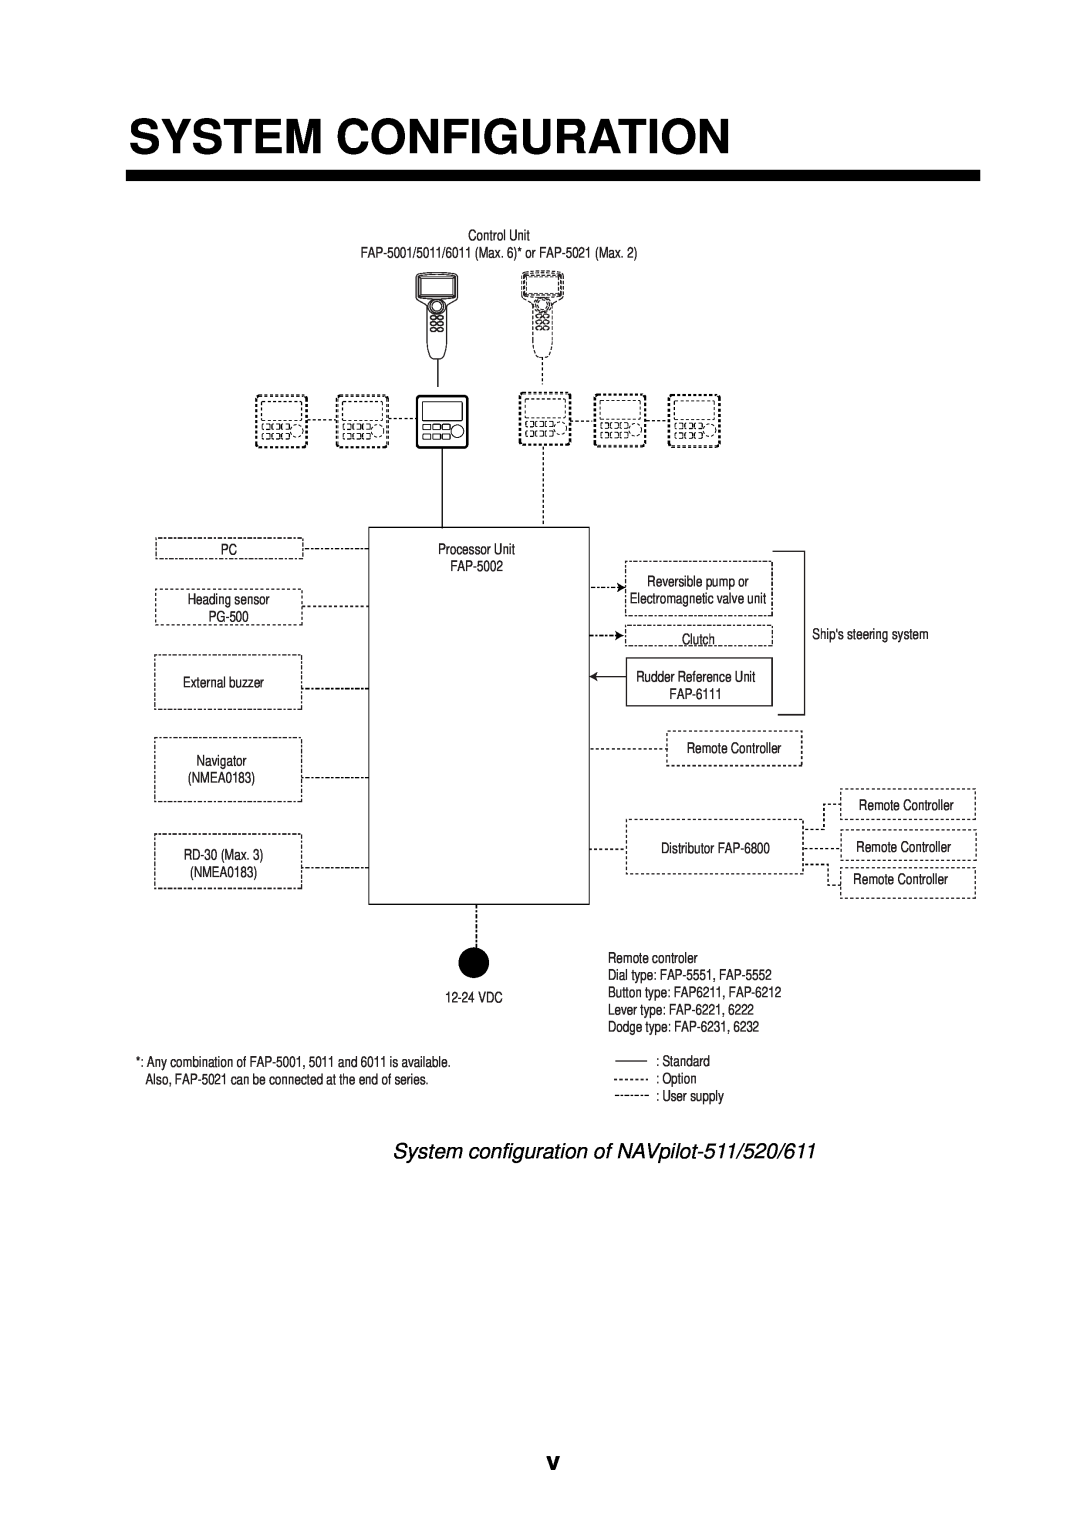 Furuno System Configuration, System configuration of NAVpilot-511/520/611, NMEA0183, Processor Unit FAP-5002 12-24 VDC 